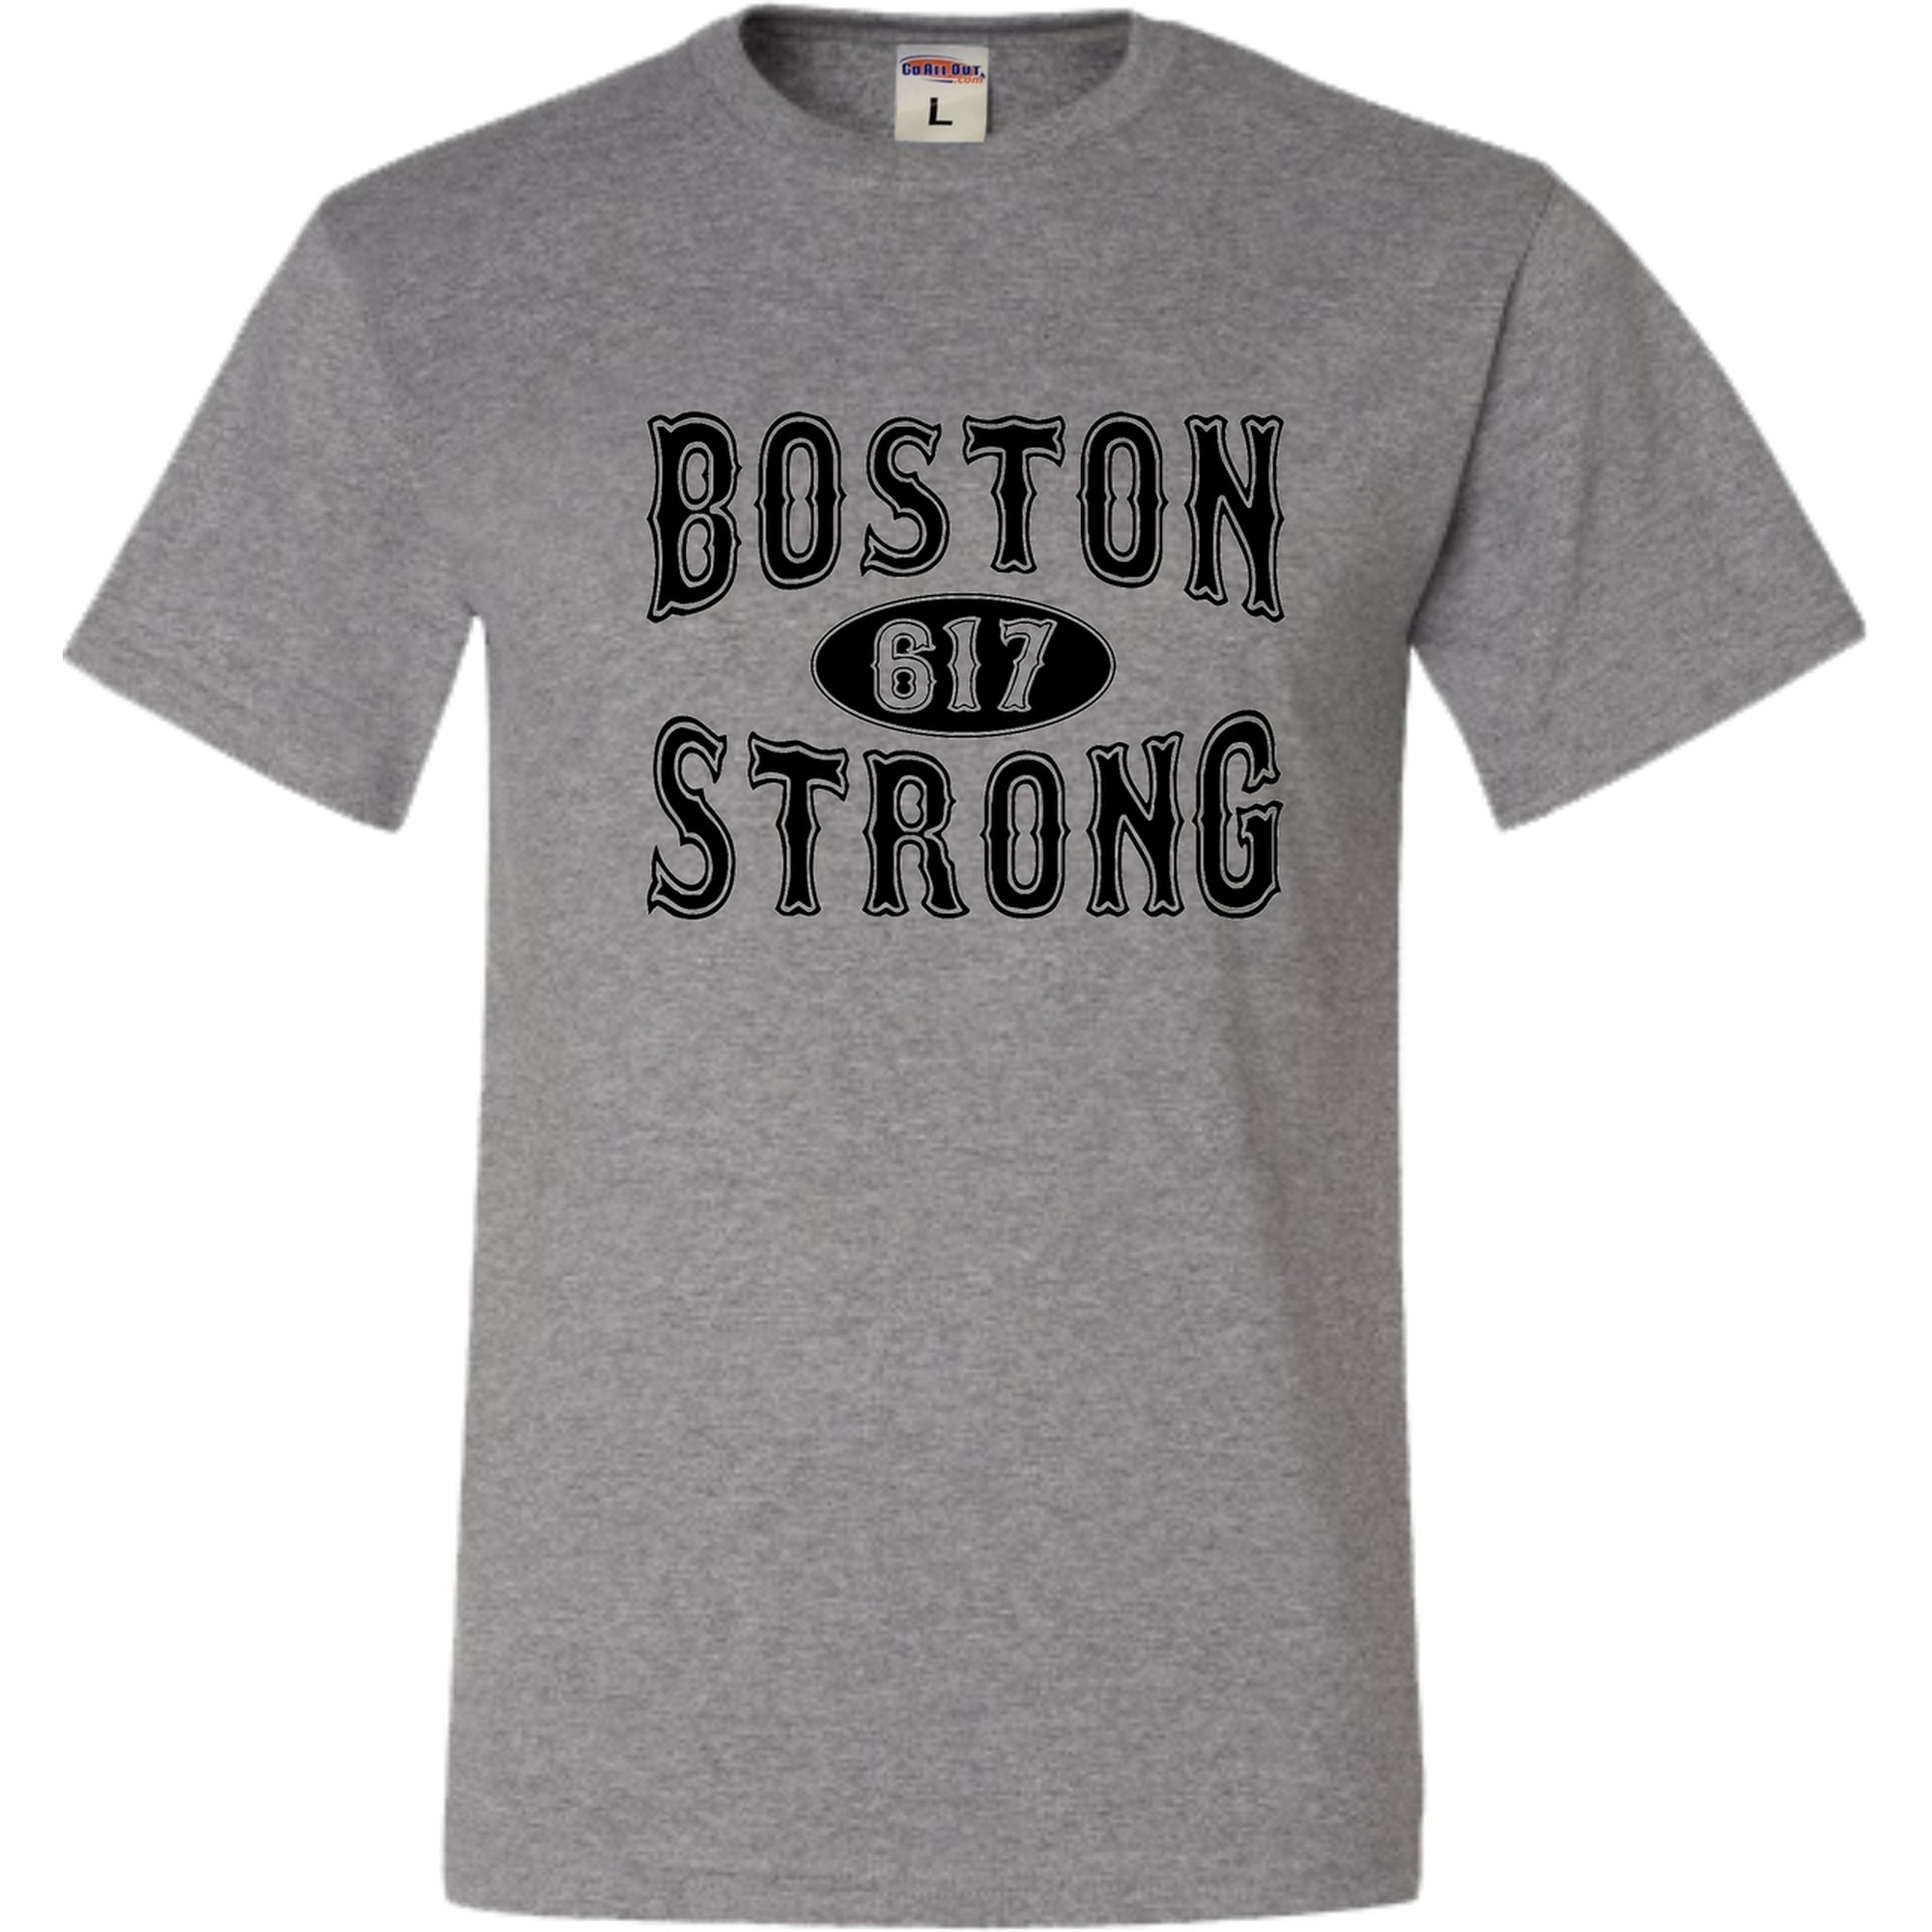 617 Boston Strong - Tee Shirt